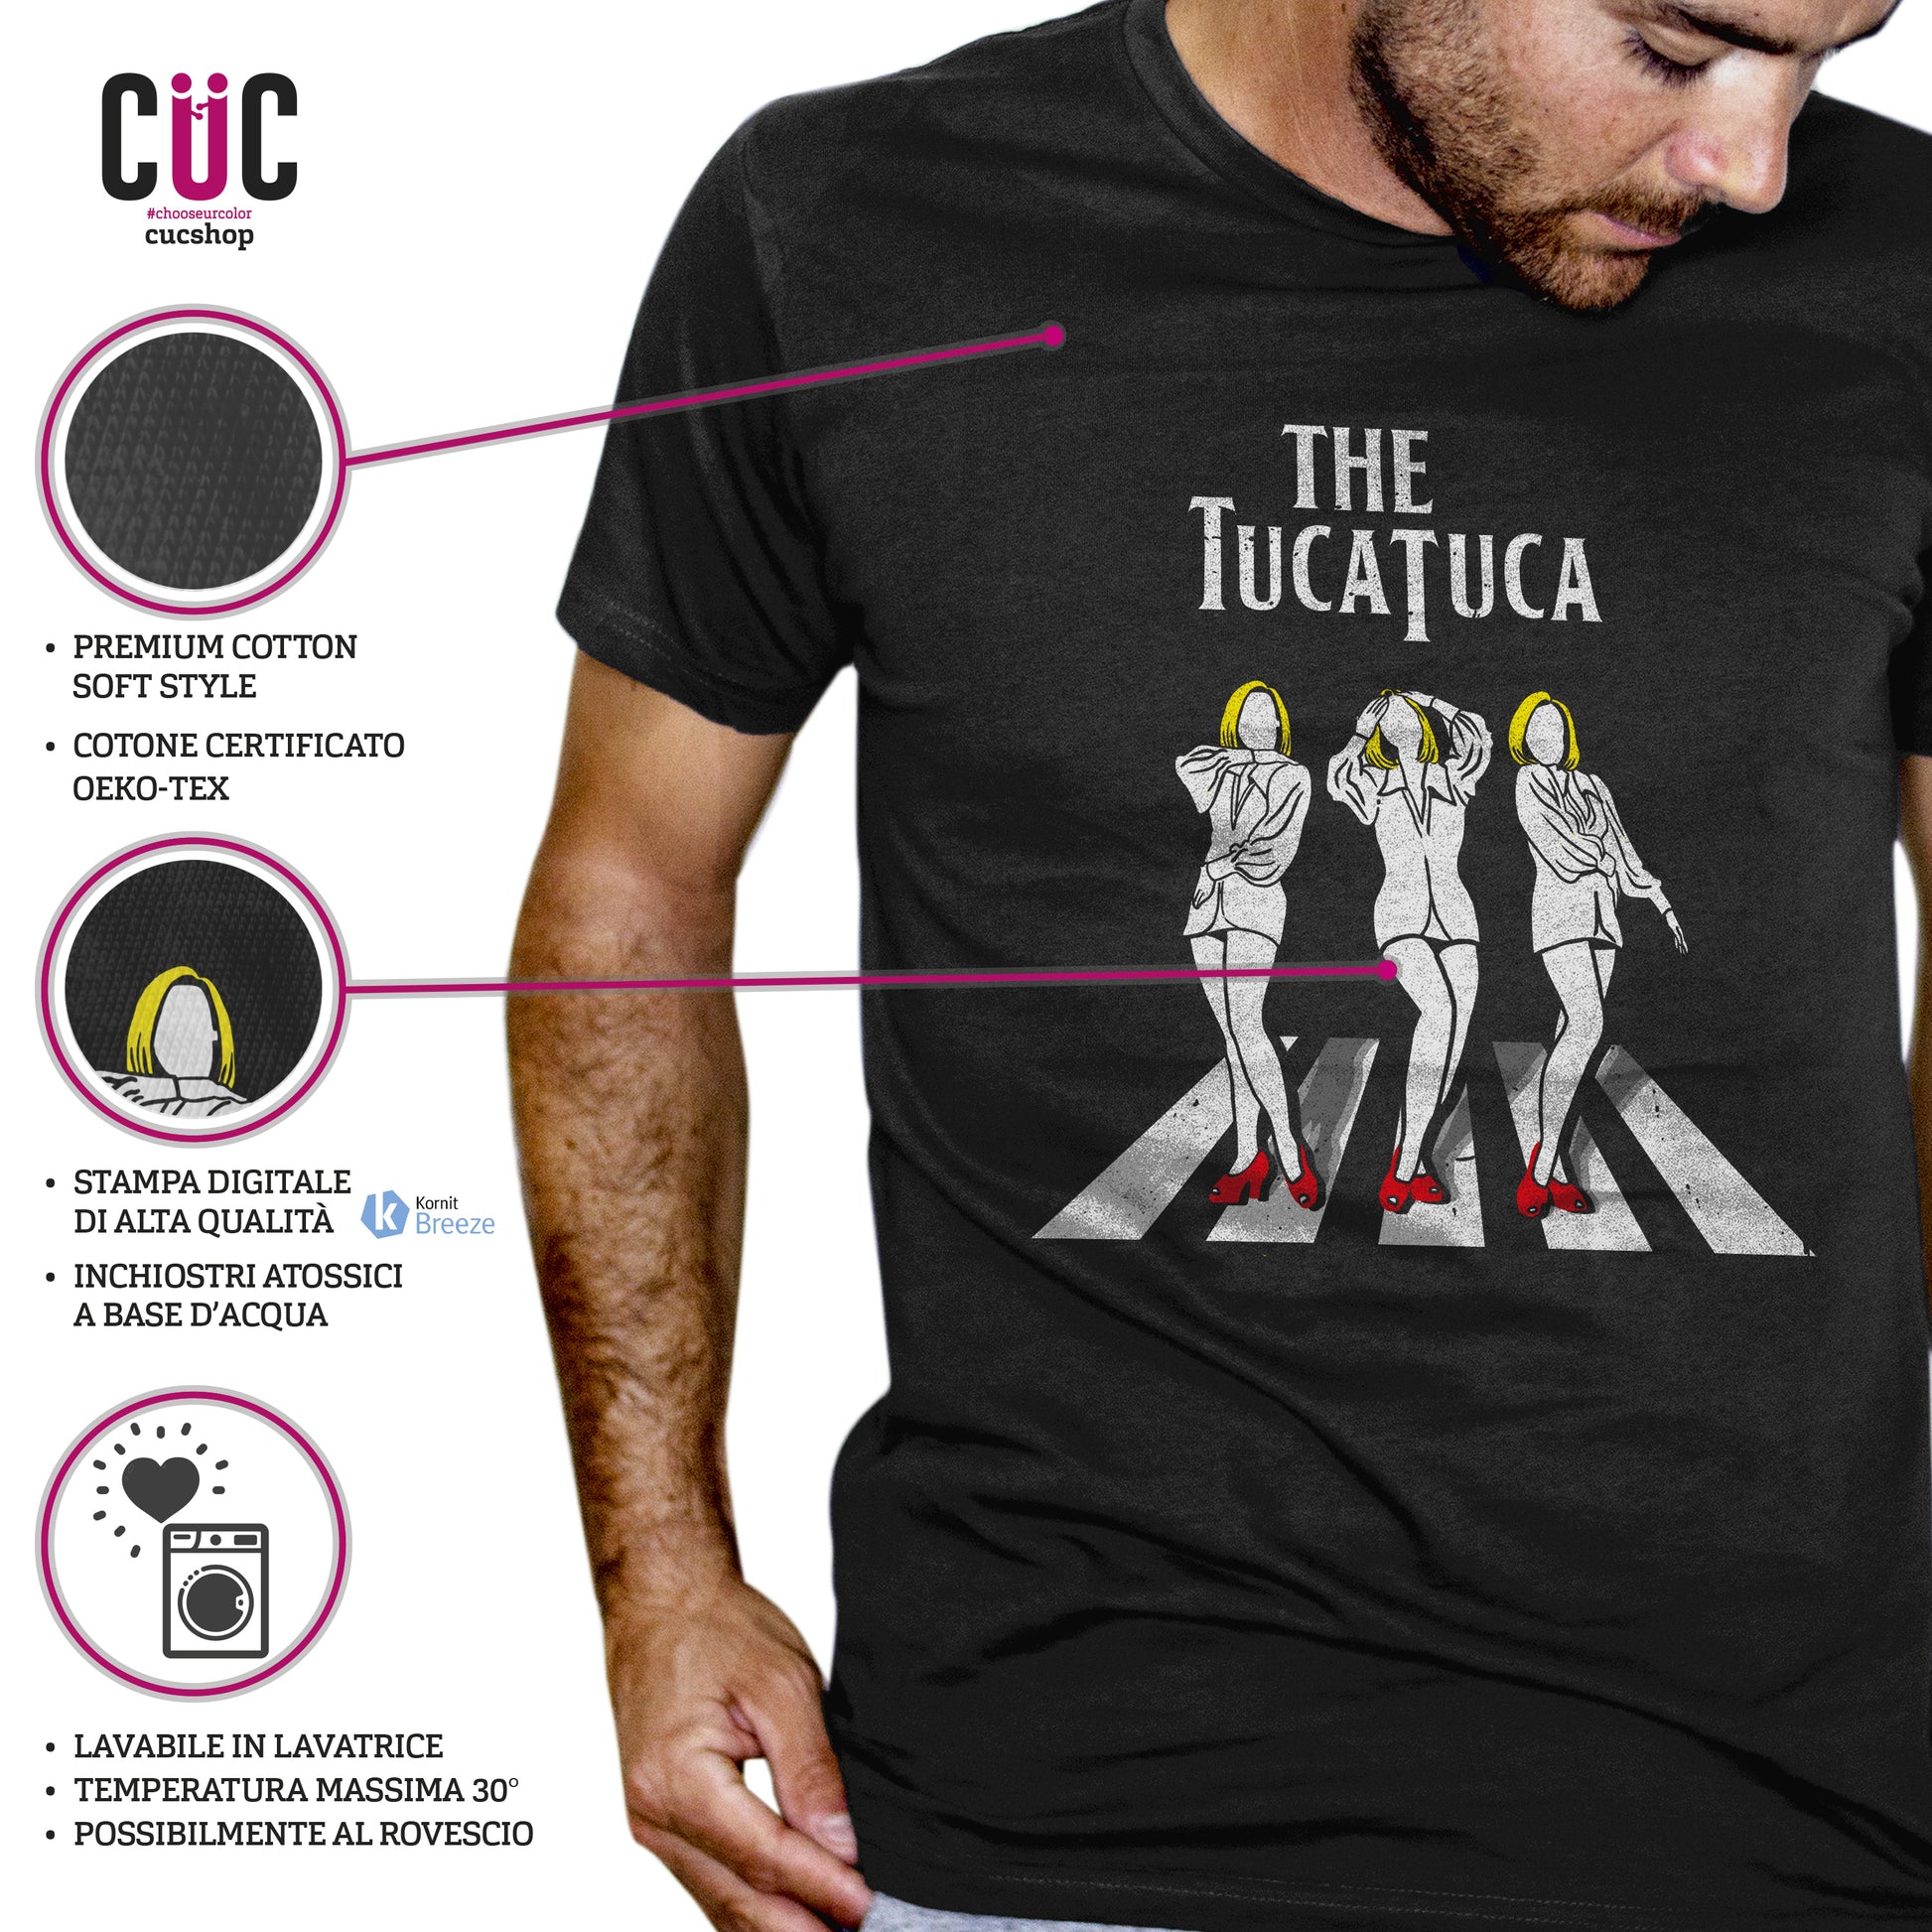 T-Shirt Divertente Tuca Tuca Like Beatles - Raffa nazionale - Trash - Music - Choose ur color - CUC chooseurcolor